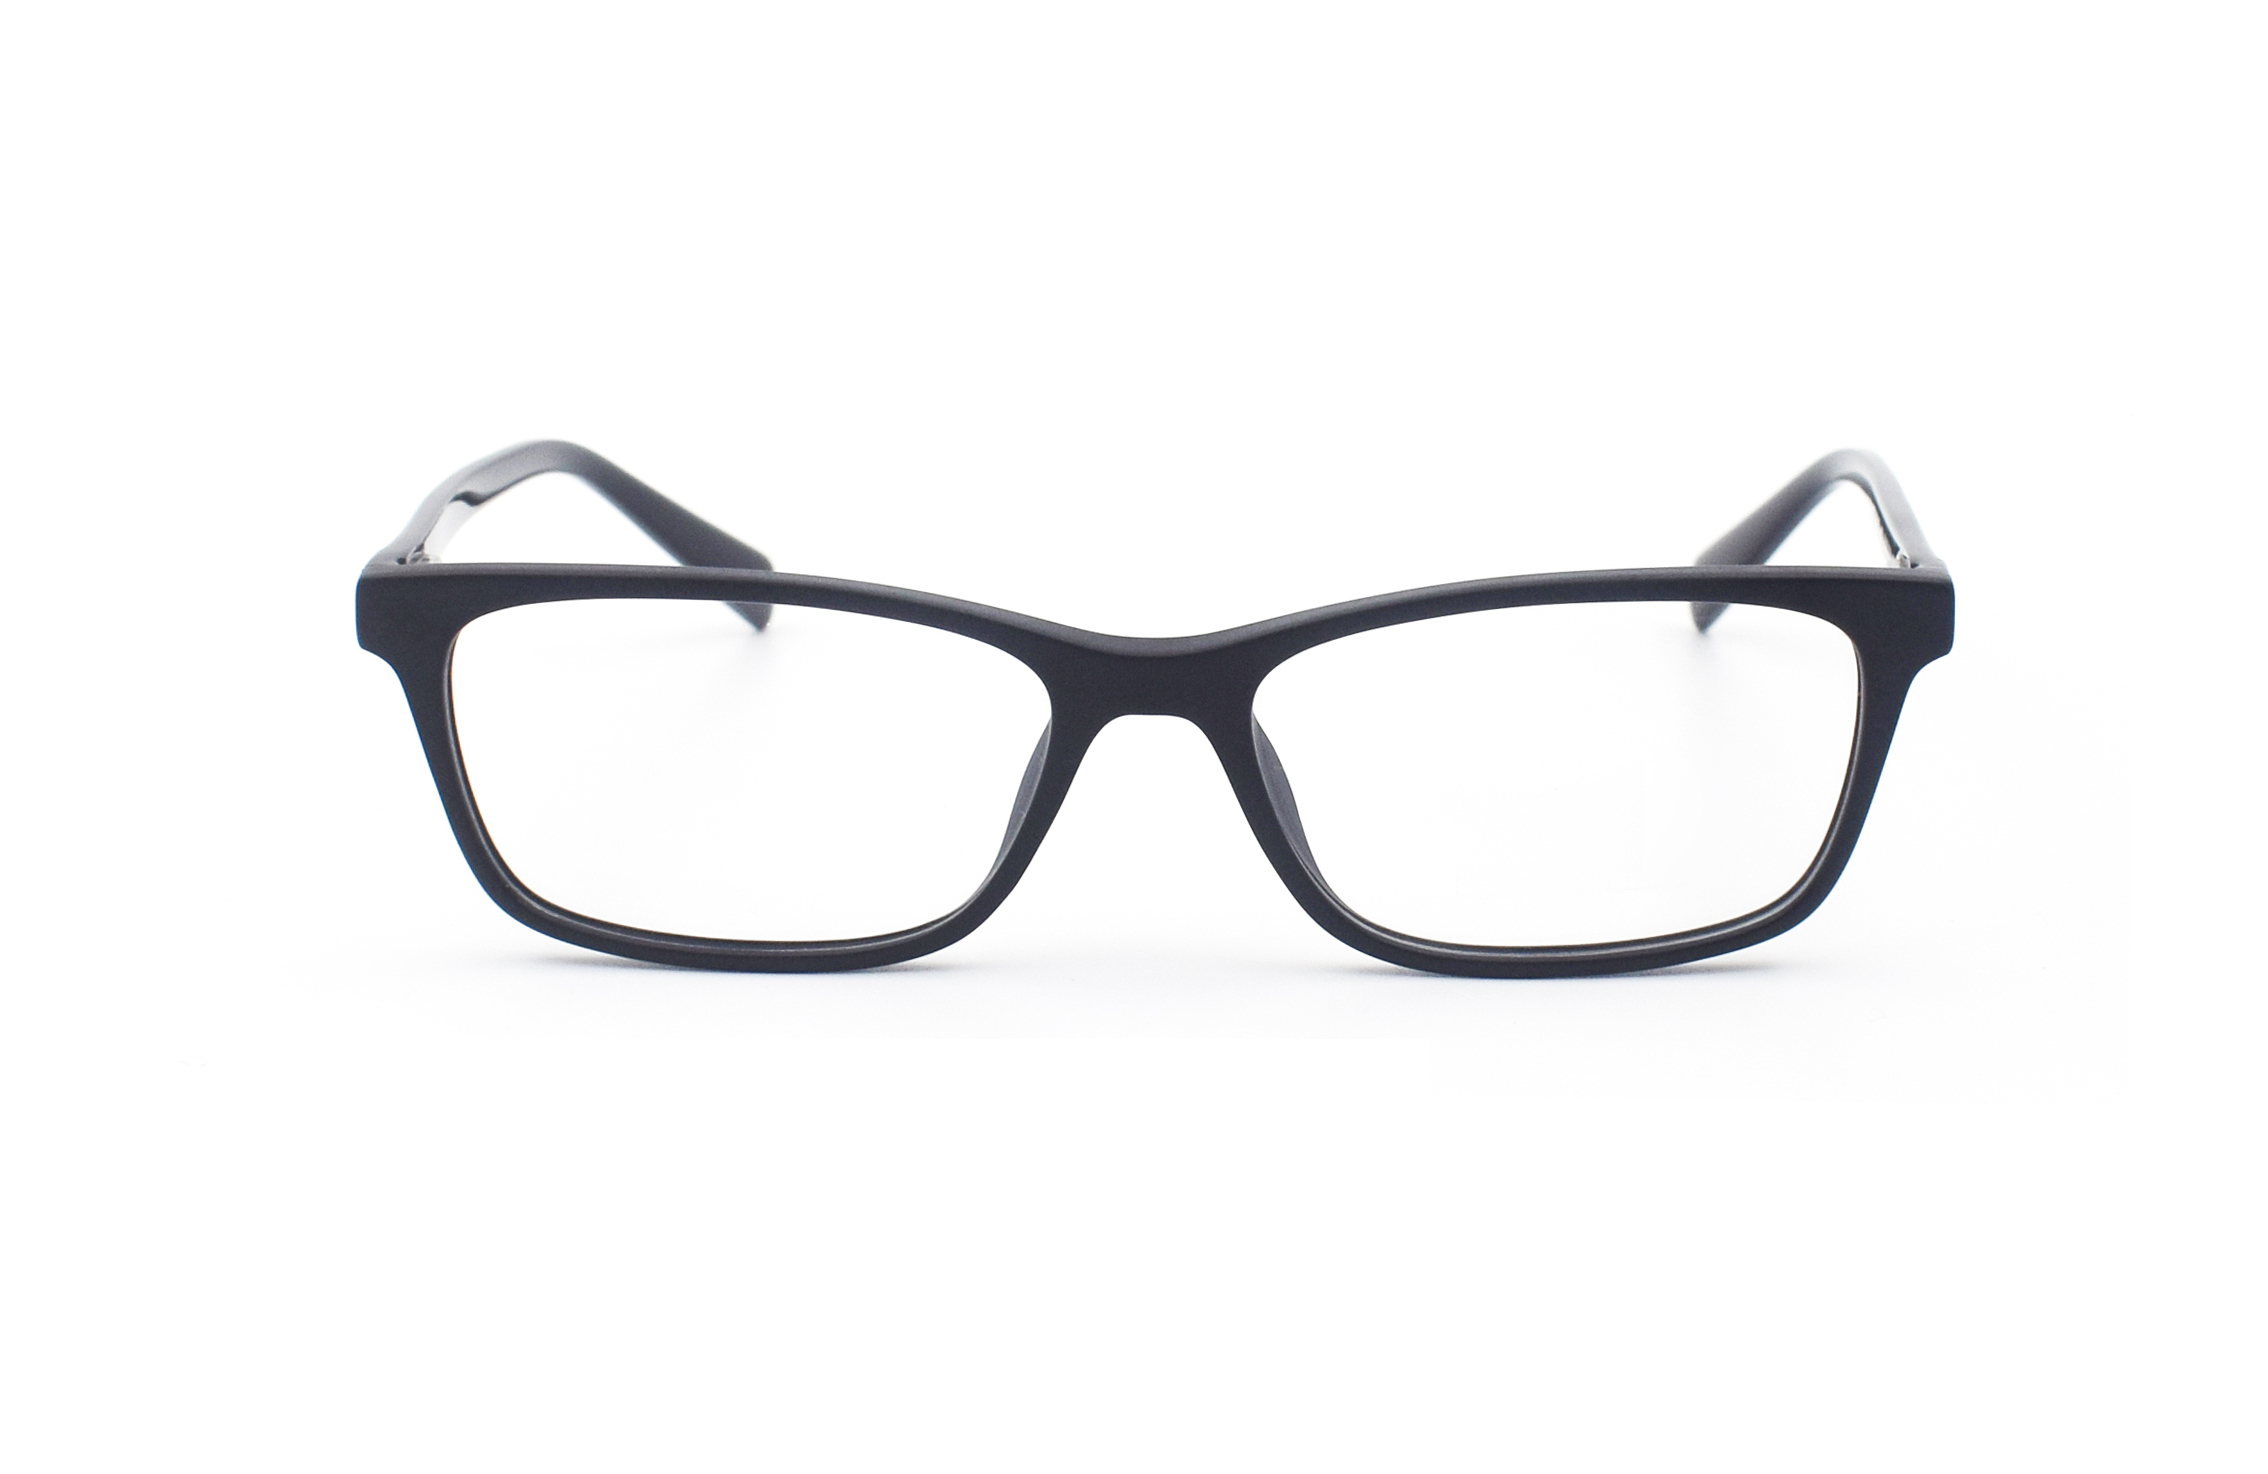 plastic optical frame experience supplier, acetate eyeglasses frame